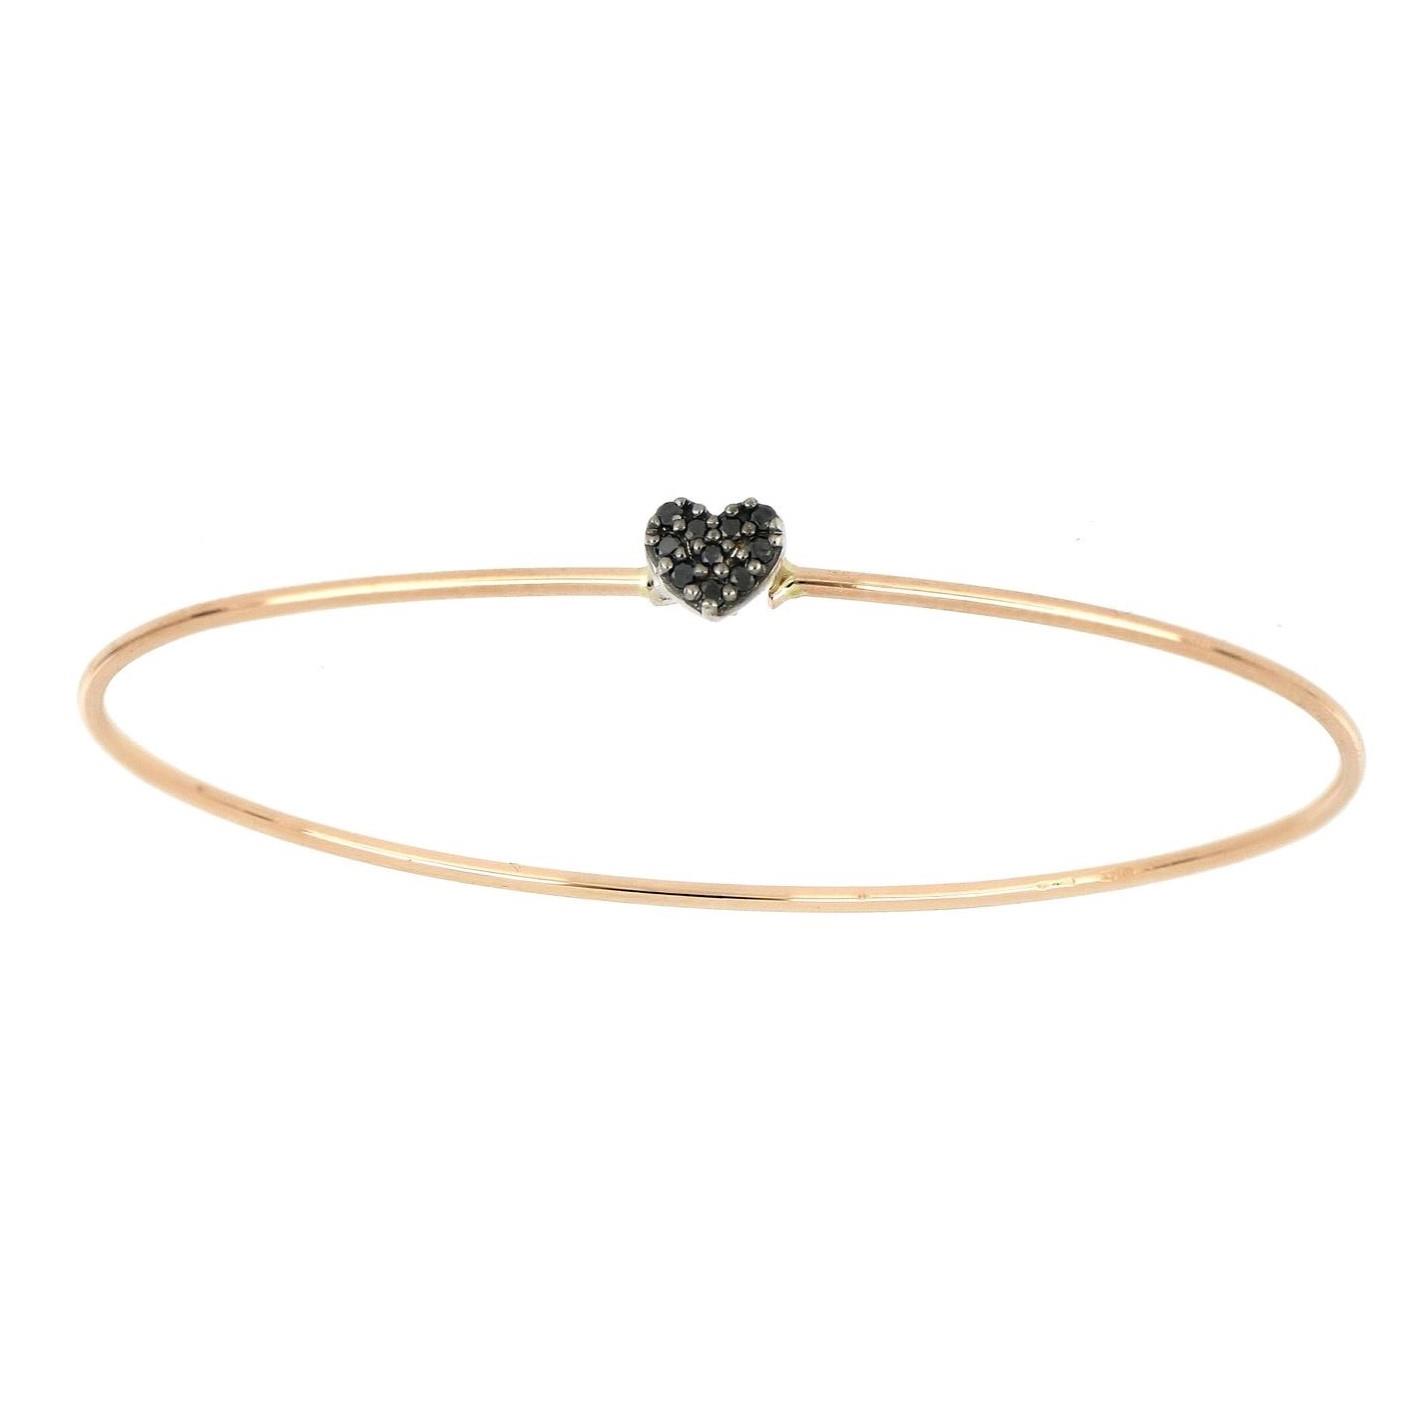 Rigid bracelet with heart in black diamonds - GOLD ART